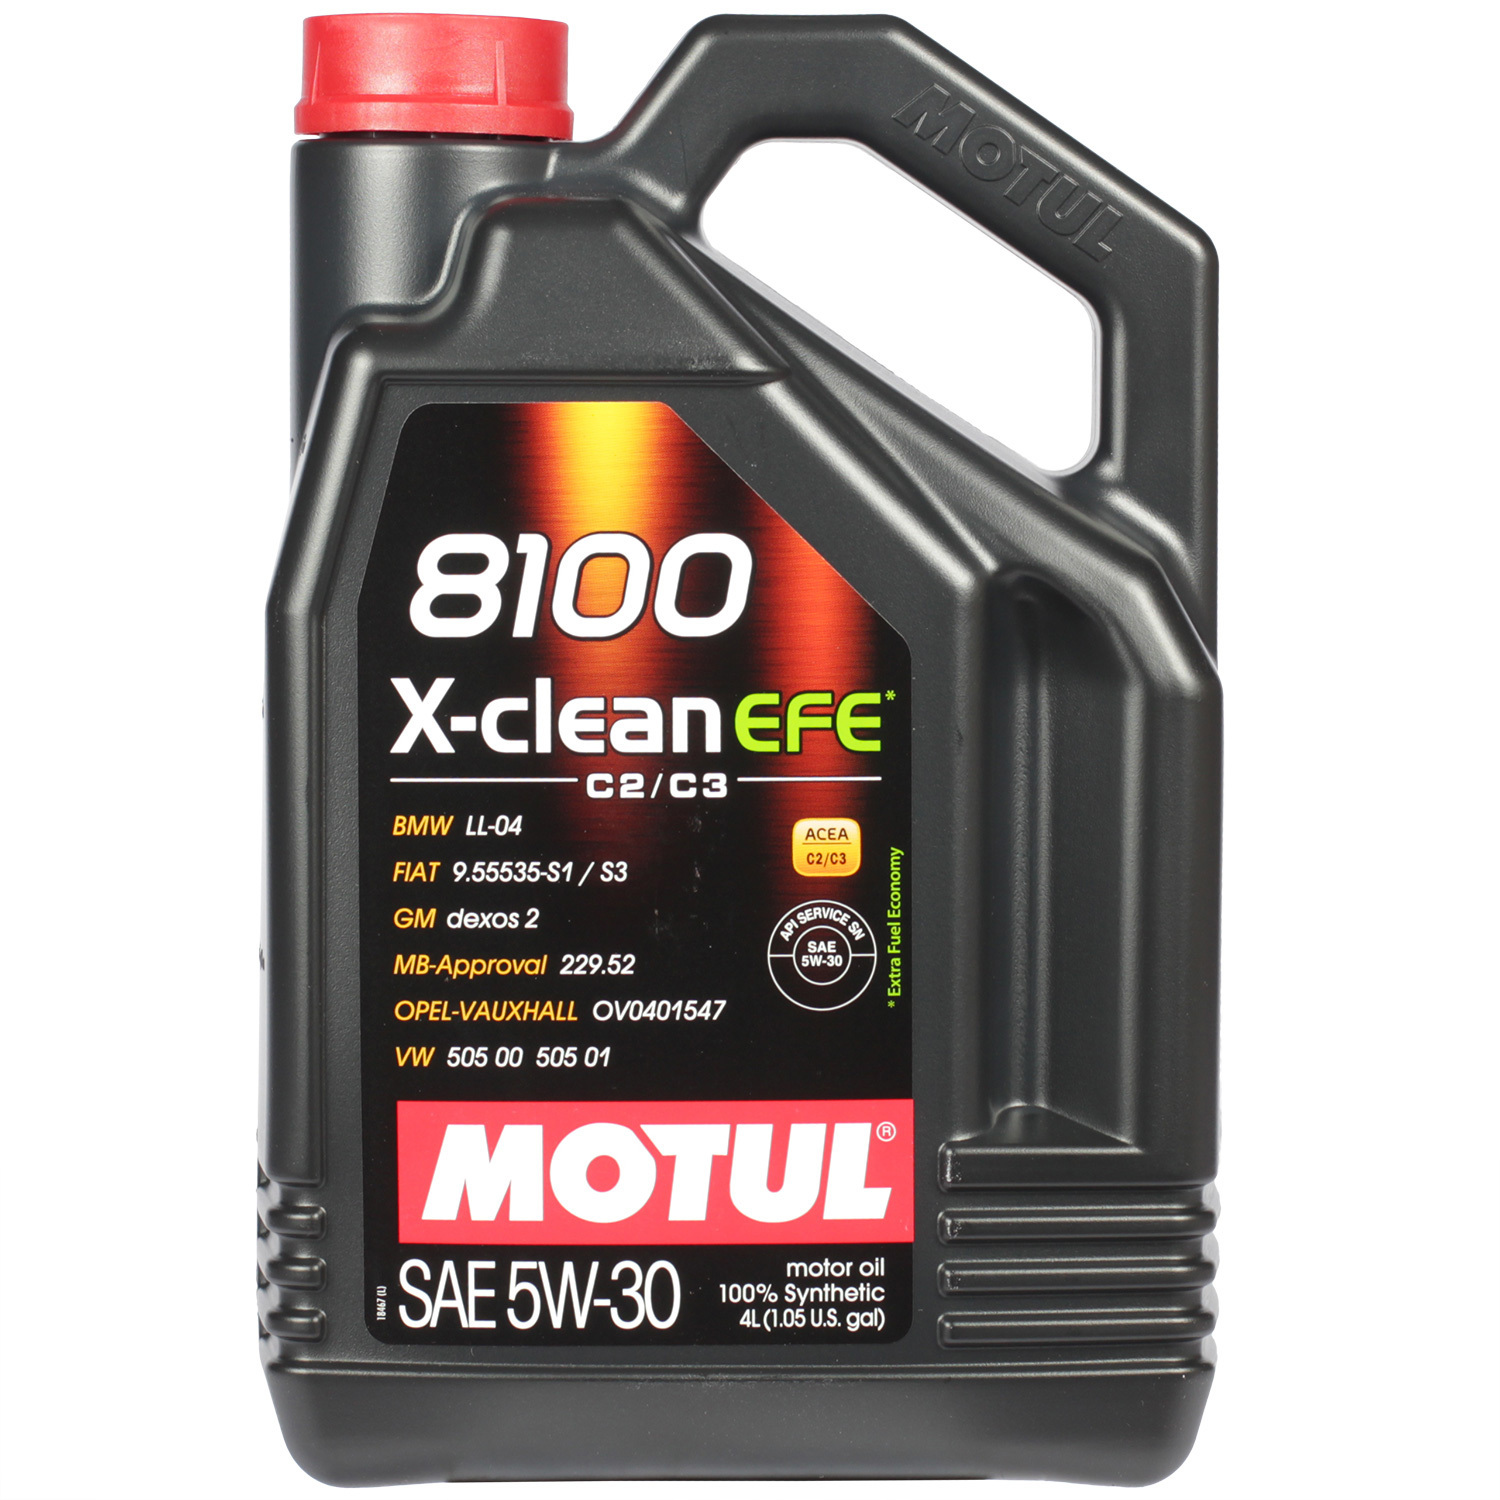 Motul Моторное масло Motul 8100 X-clean EFE 5W-30, 4 л масло моторное motul 8100 x cess 5w 30 5 л 108946